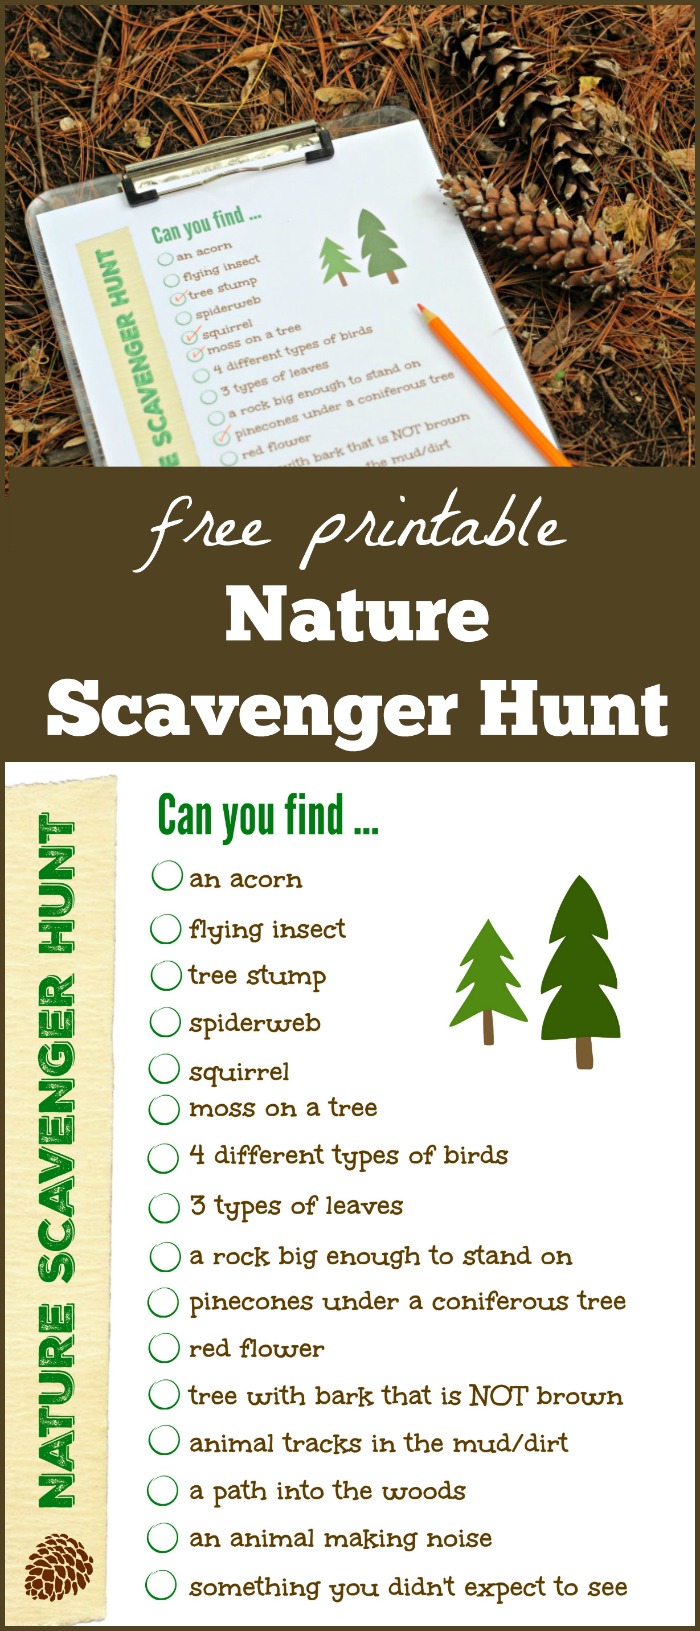 Nature Scavenger Hunt printable list for preschool, kids, tweens and families